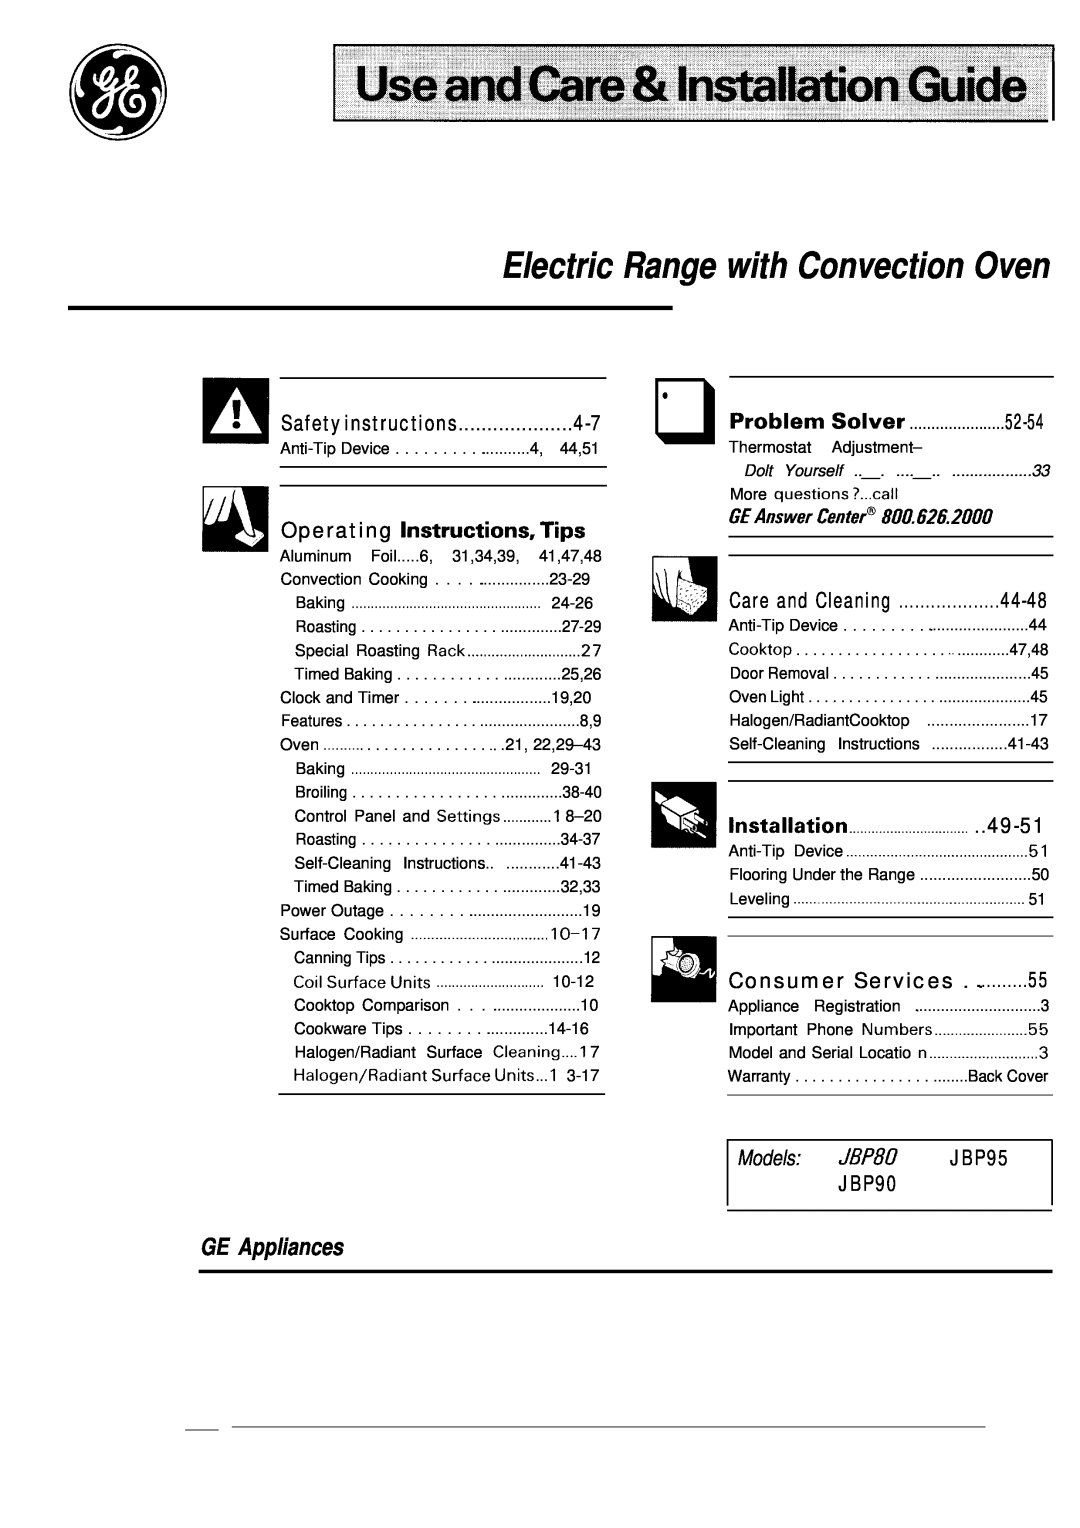 GE JBP80 warranty Electric Range with Convection Oven, GE Appliances, iiill, Iiiiila, Operating lnstructions,Tips, 52-54 